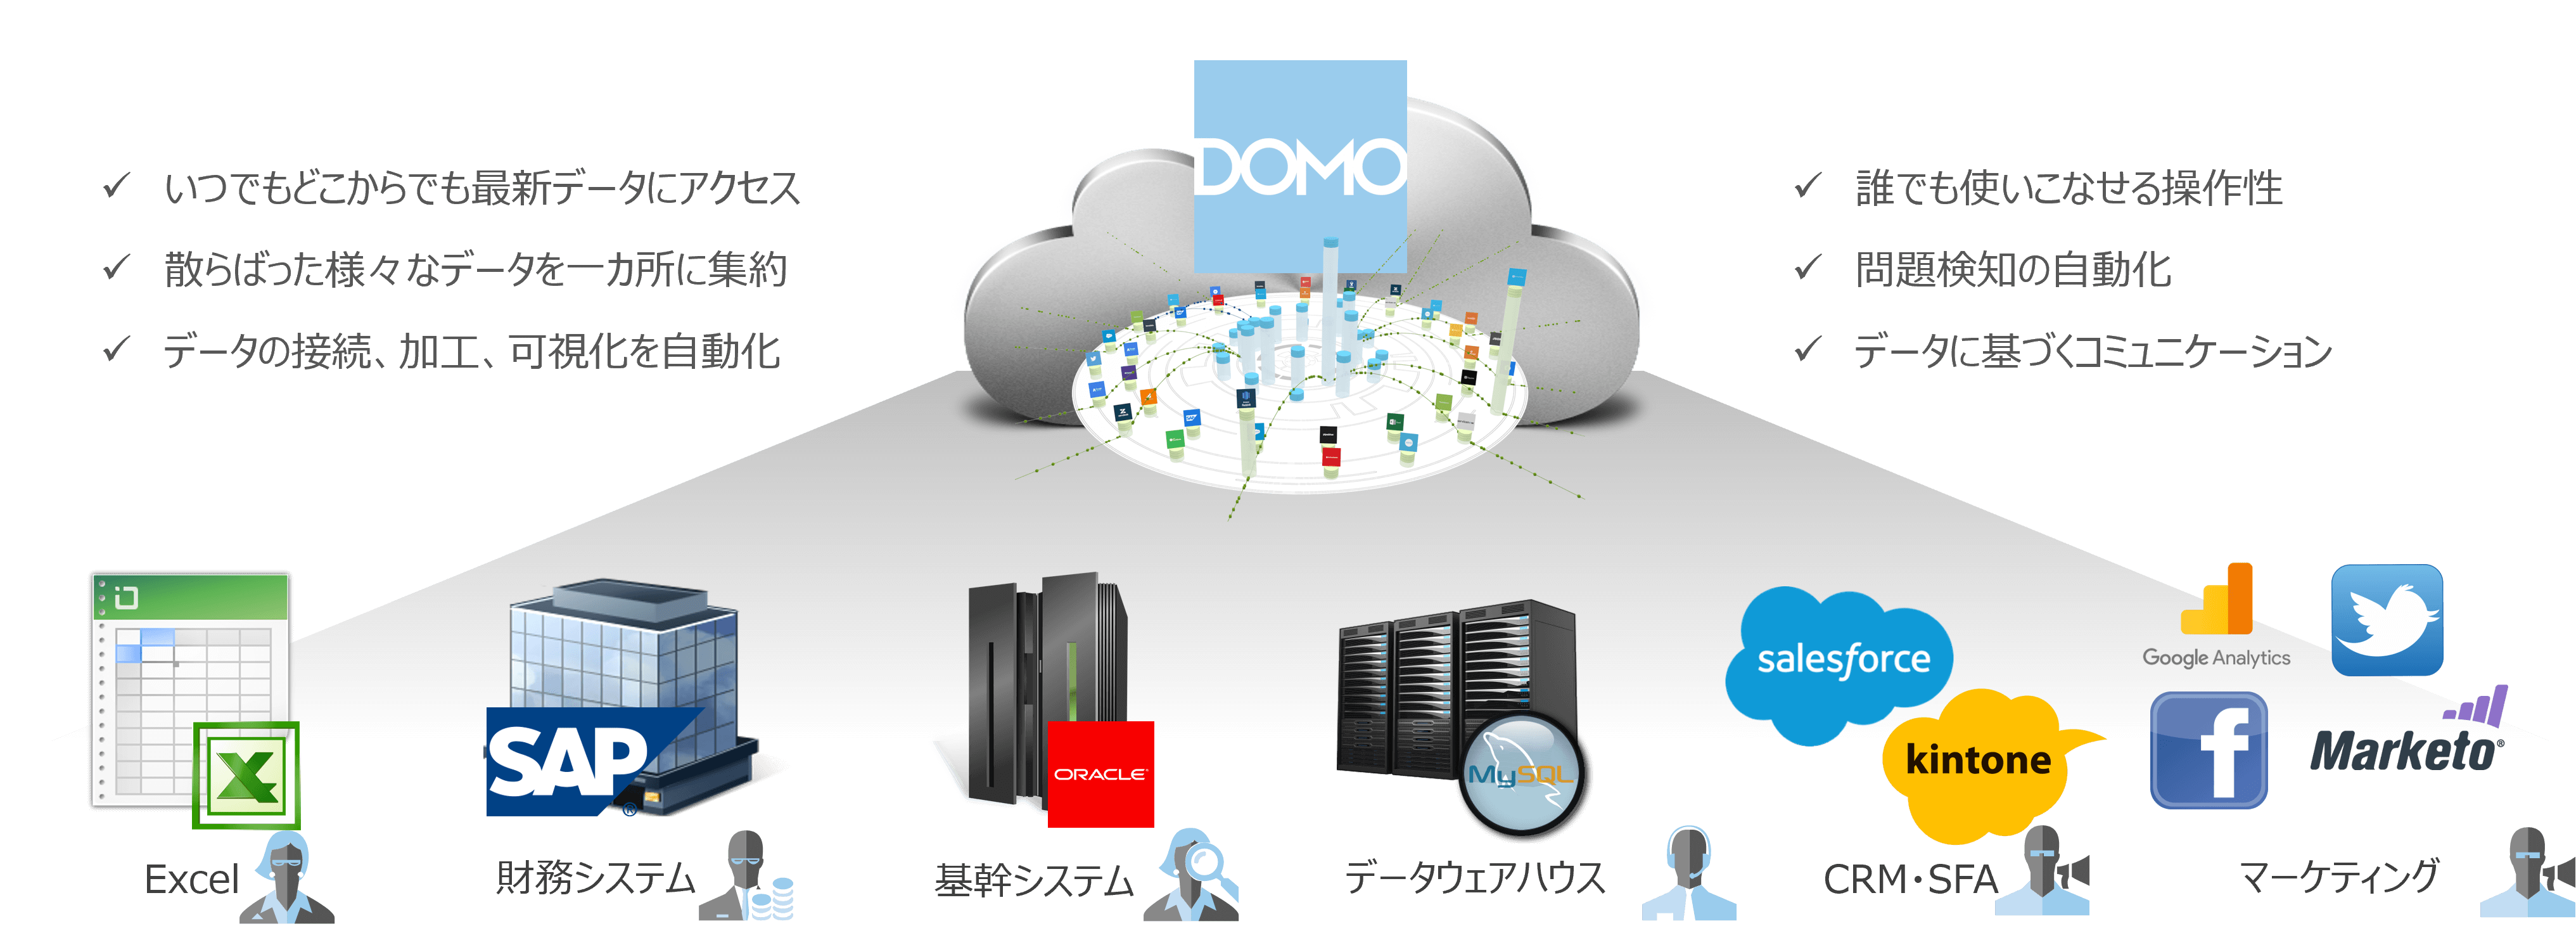 Domoとはデータドリブン経営の実現に必要な機能を実装したクラウドサービス